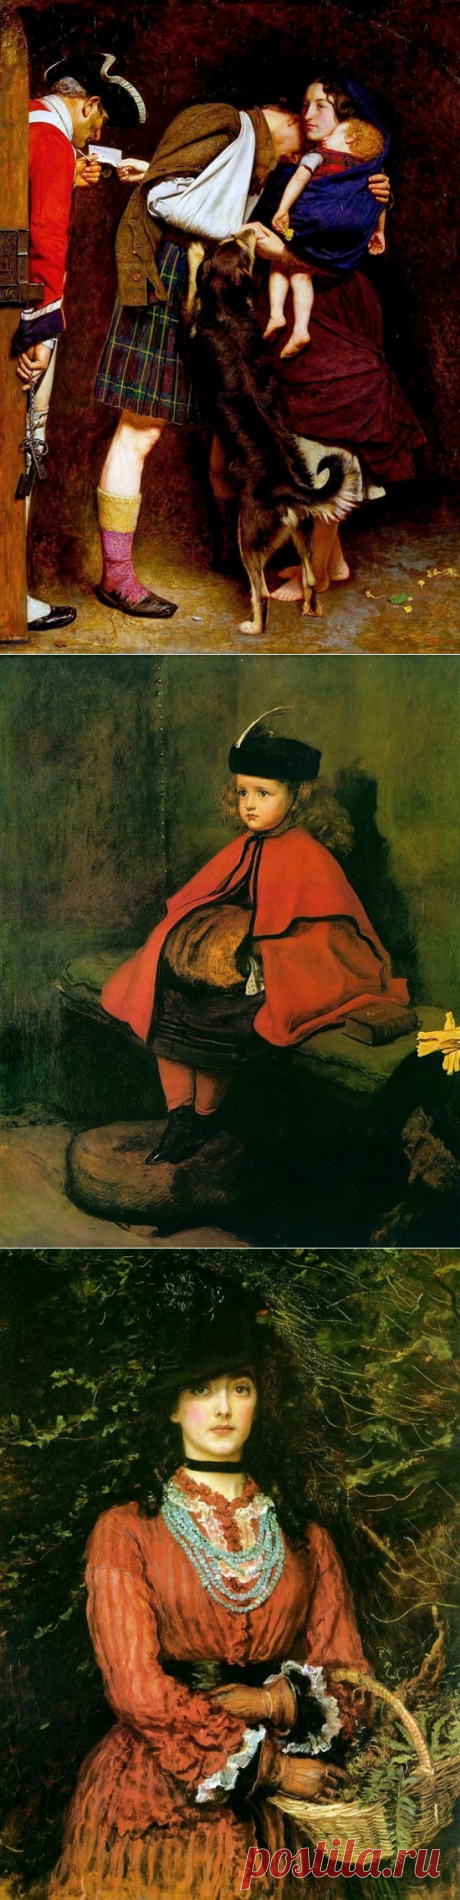 Художник Джон Эверетт Милле (John Everett Millais). Картины